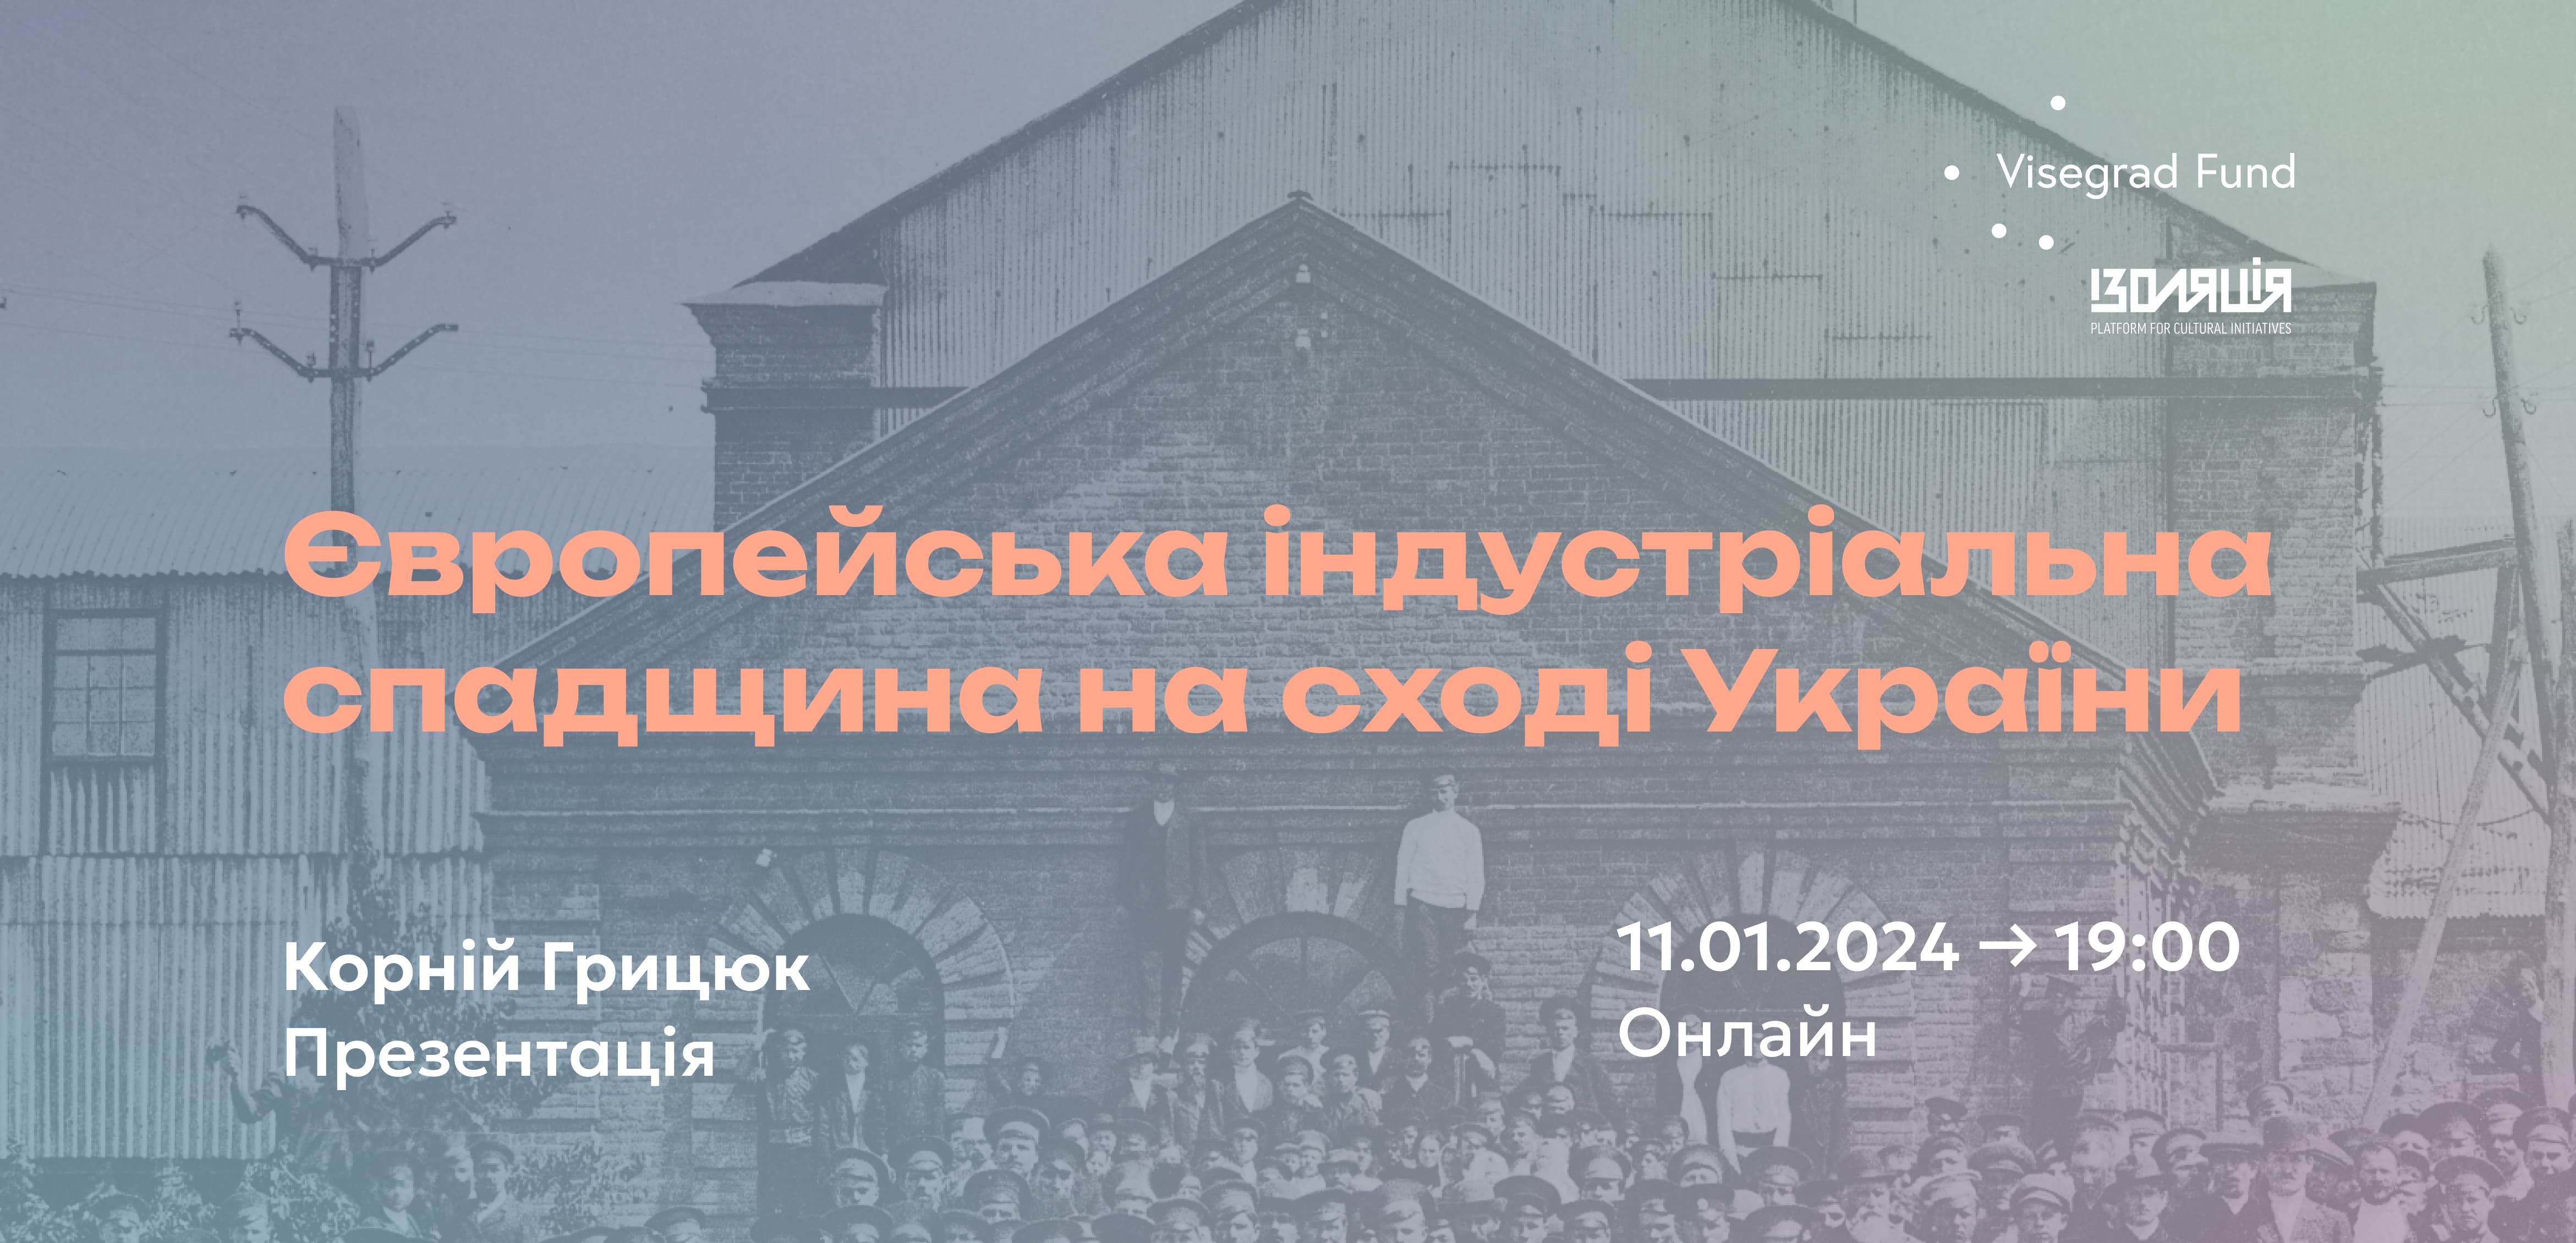 IZOLYATSIA Foundation invites to the presentation European Industrial Heritage in Eastern Ukraine by Ukrainian film director and screenwriter Korniy Hrytsiuk